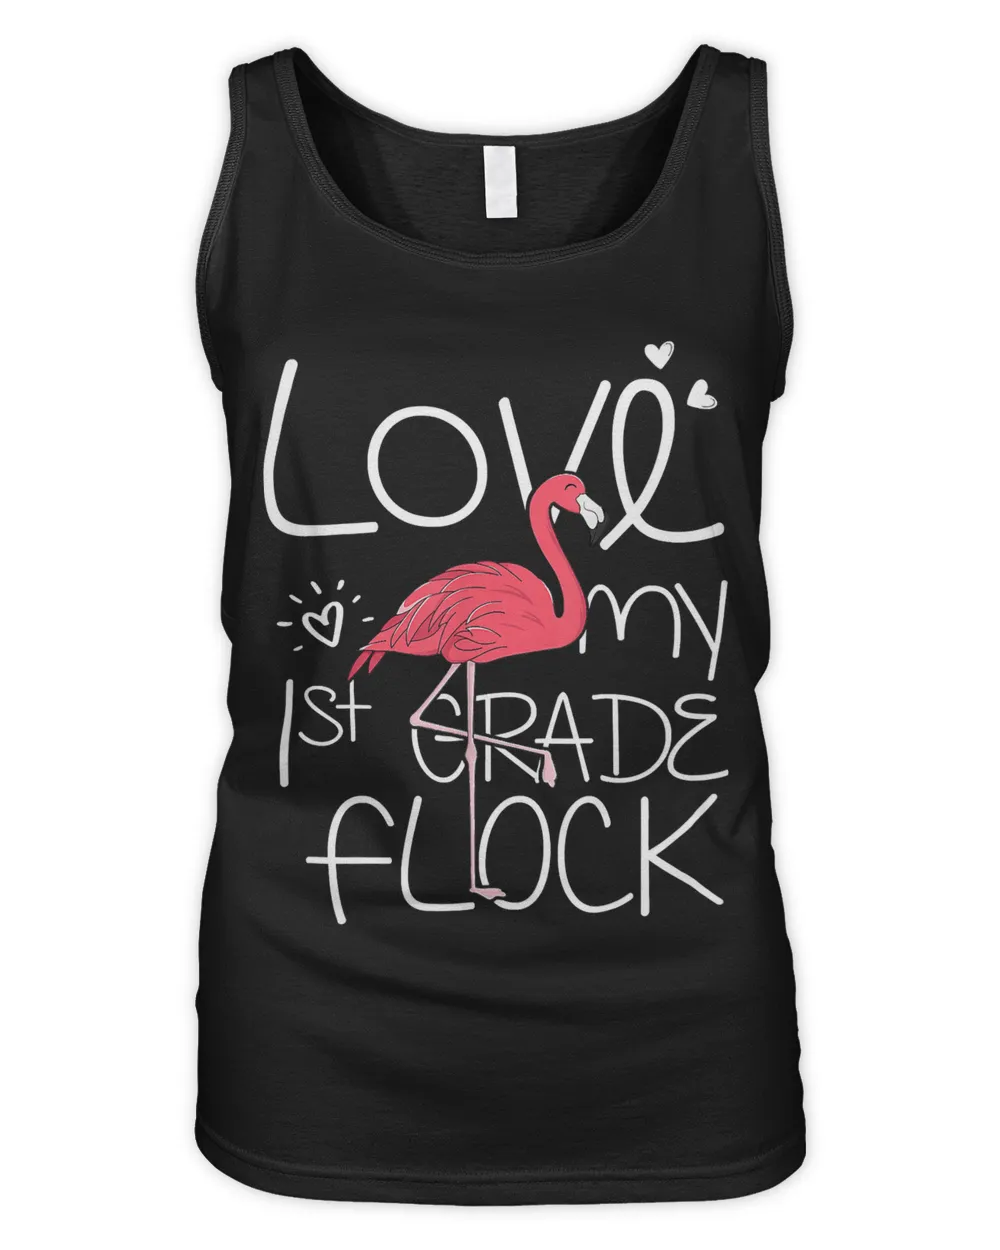 Teacher Valentines Day Shirt LOVE st Grade Flock Flamingo